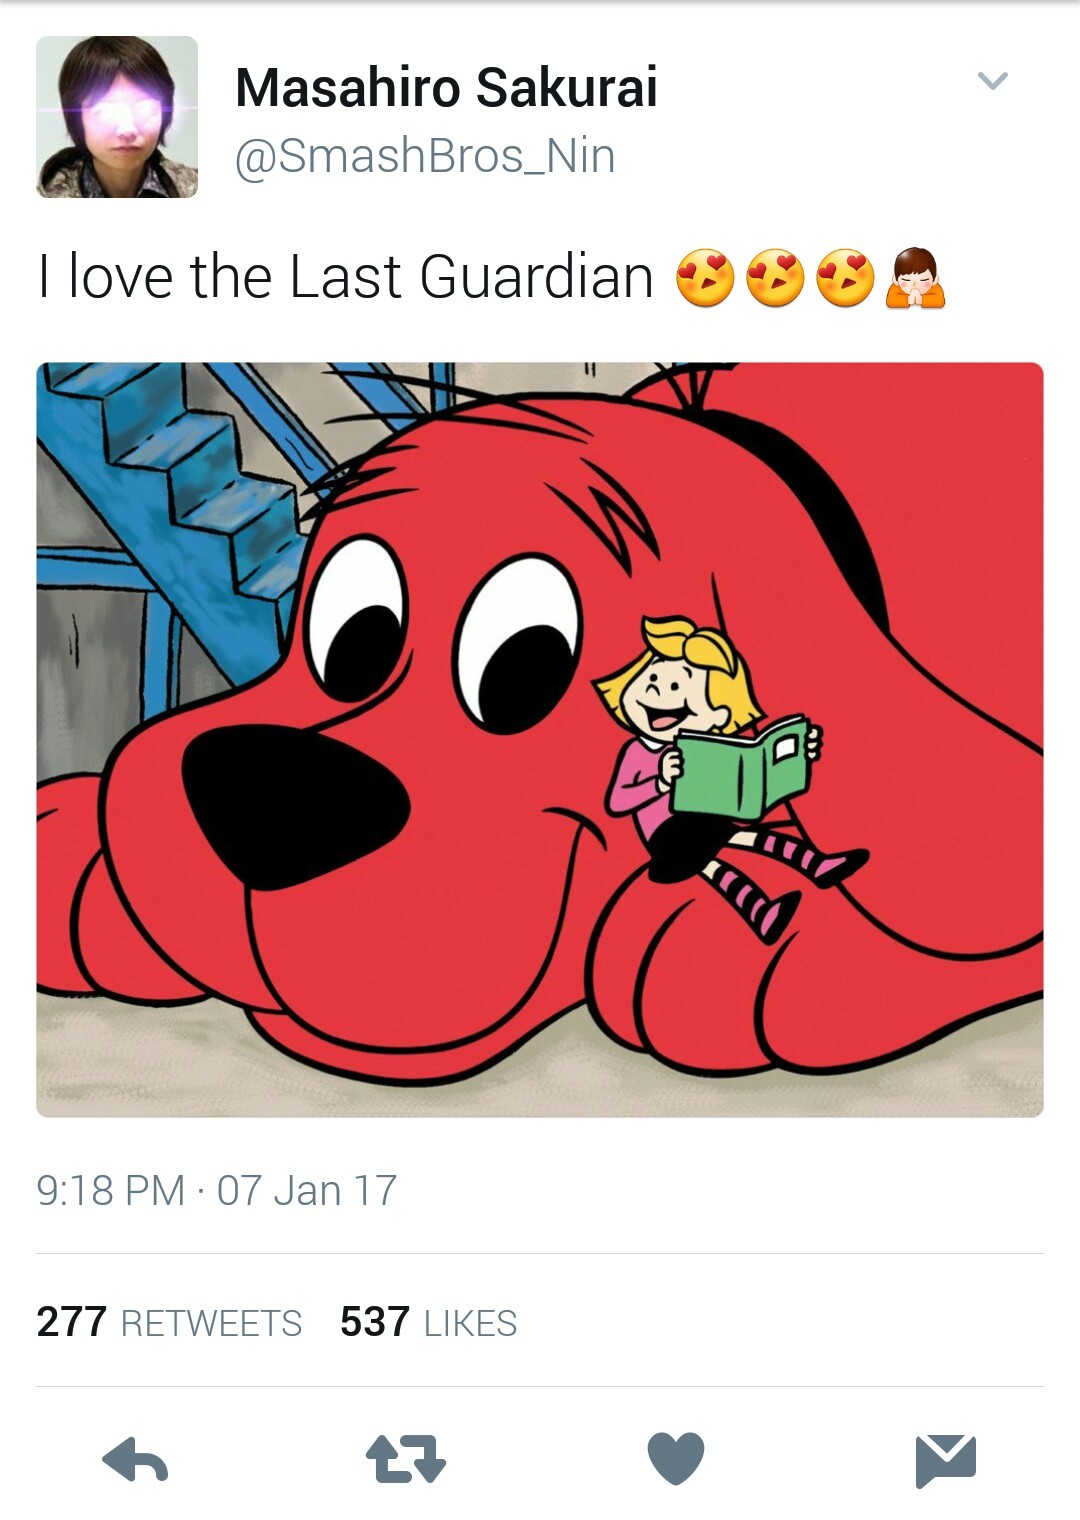 Who else loved the last guardian? - meme